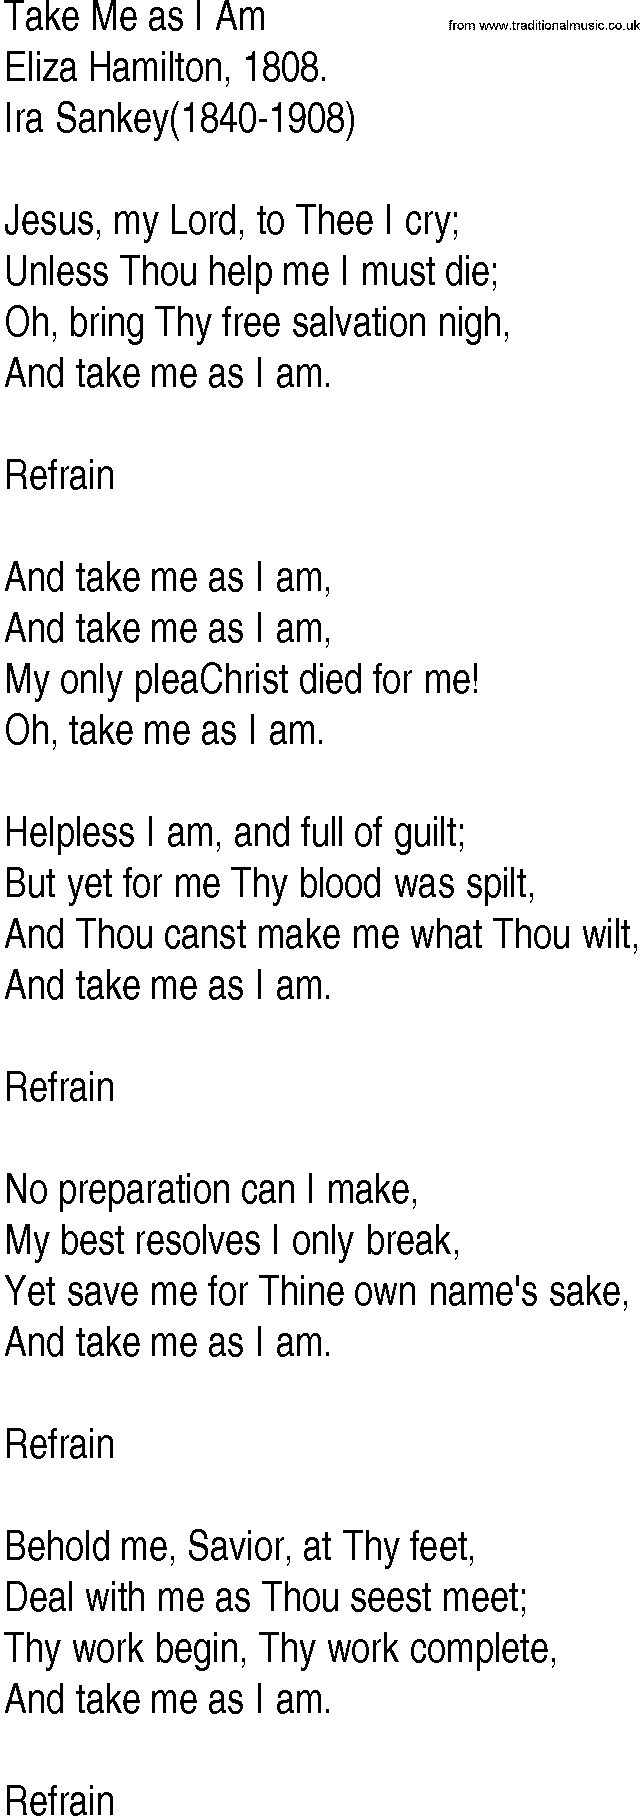 Hymn and Gospel Song: Take Me as I Am by Eliza Hamilton lyrics